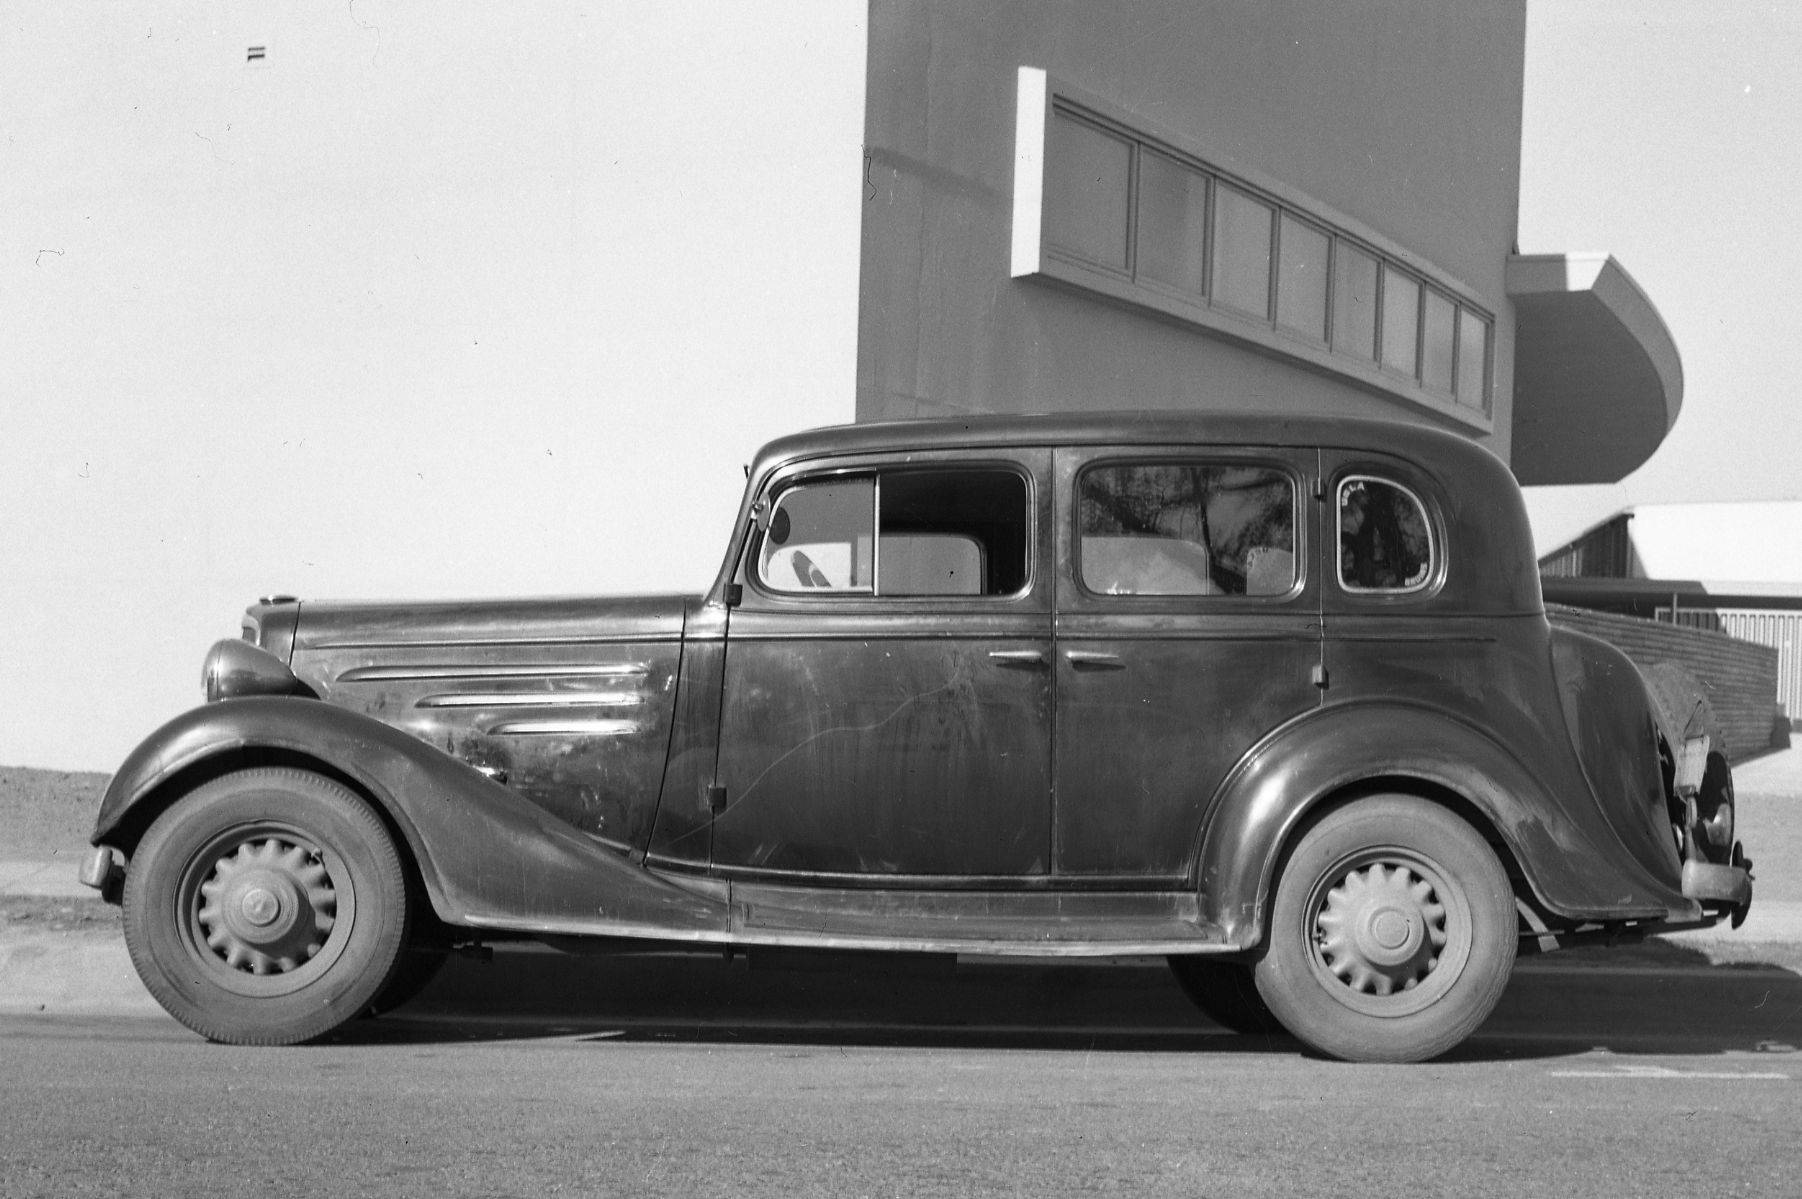 High Resolution Wallpaper | 1934 Chevrolet Sedan 1802x1199 px